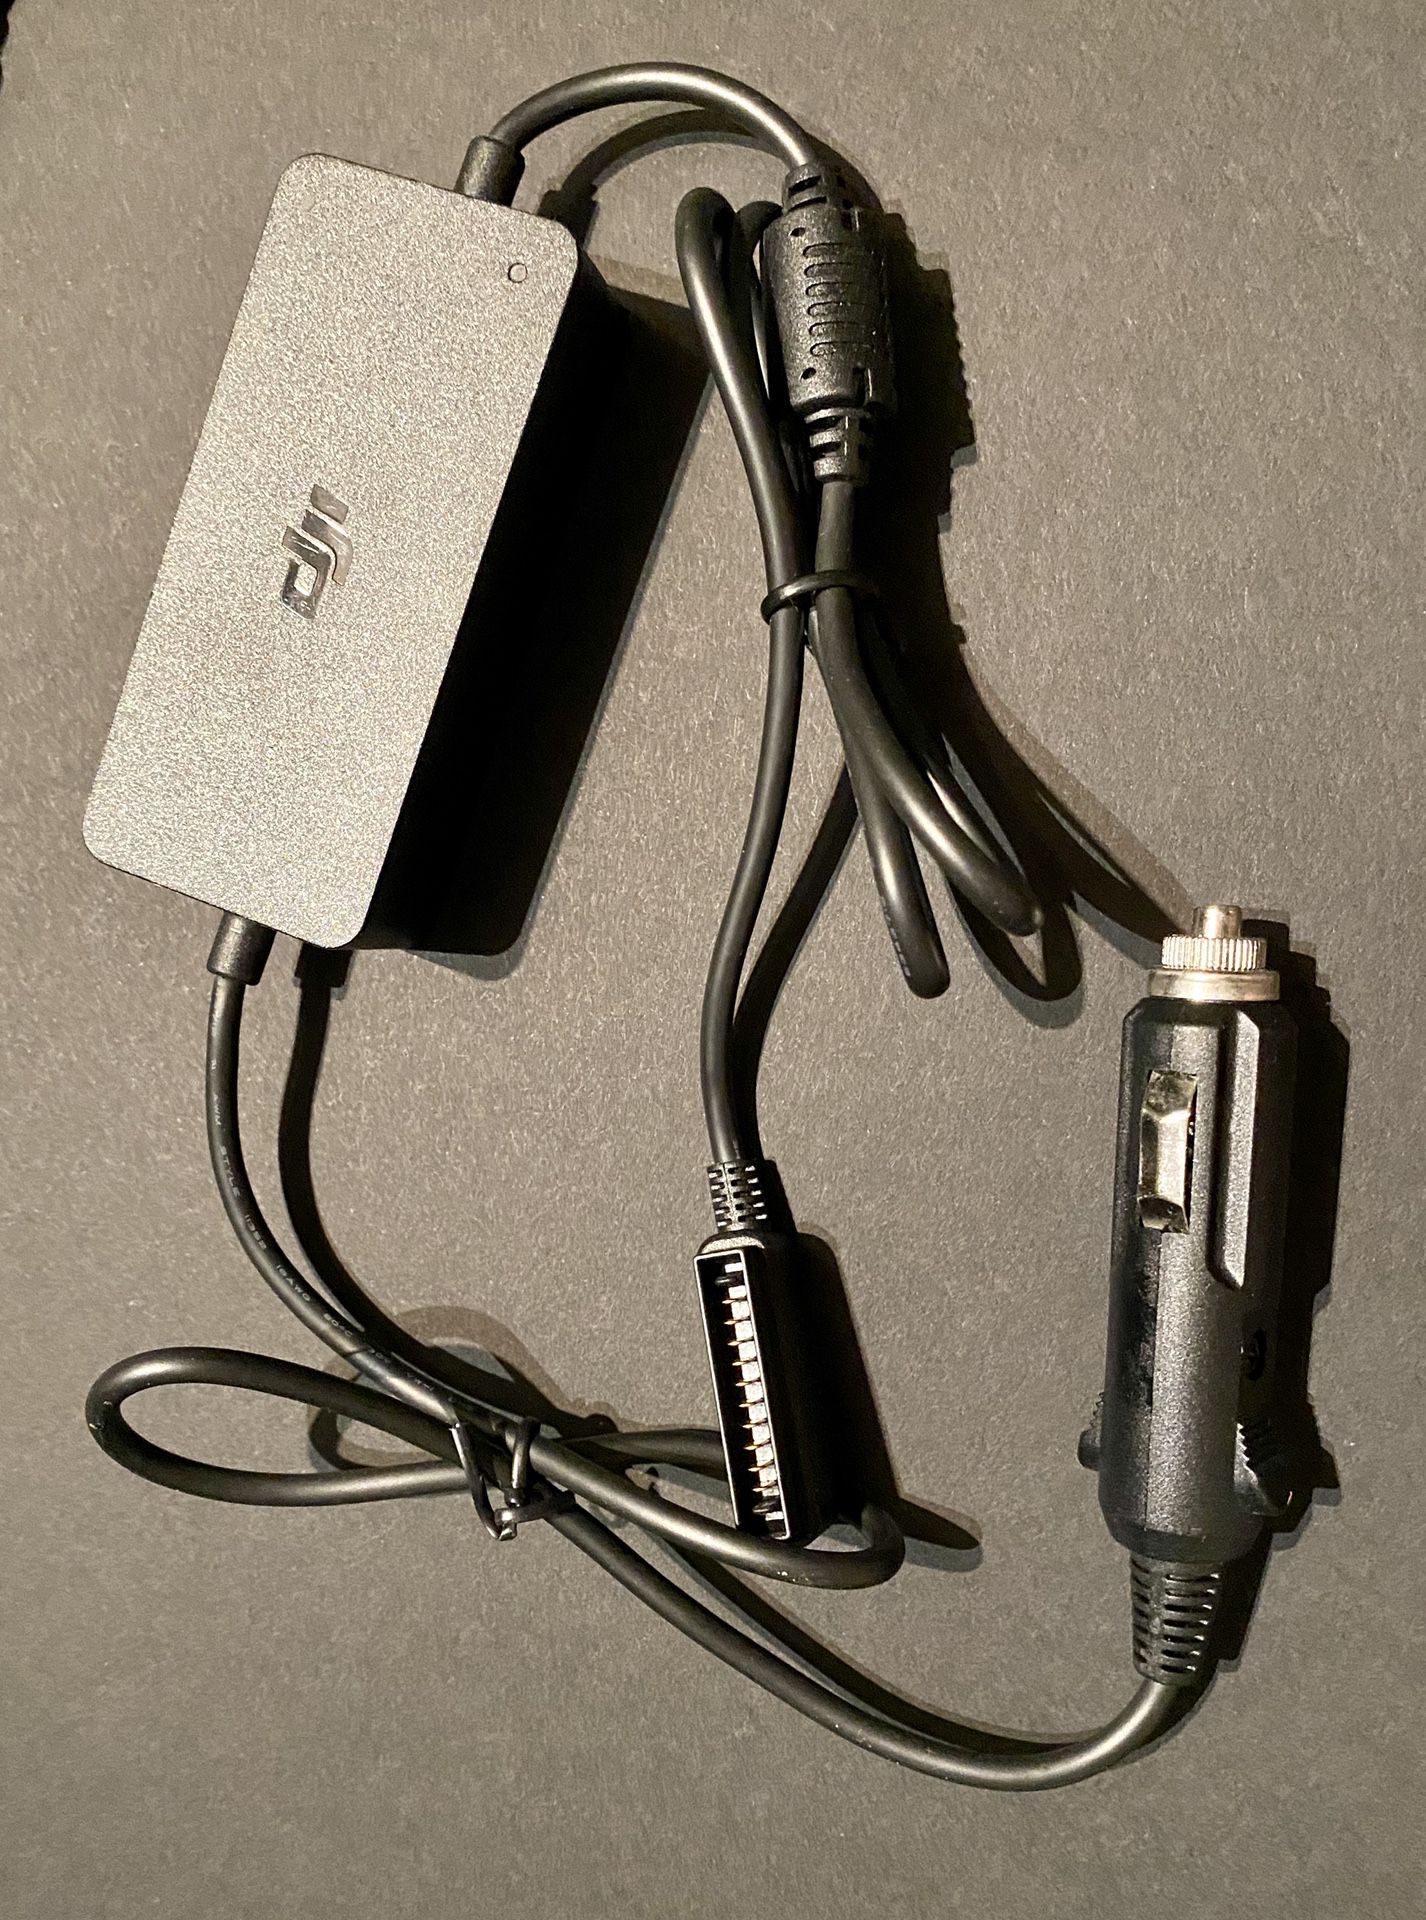 Car battery charger for DJI Mavic Pro